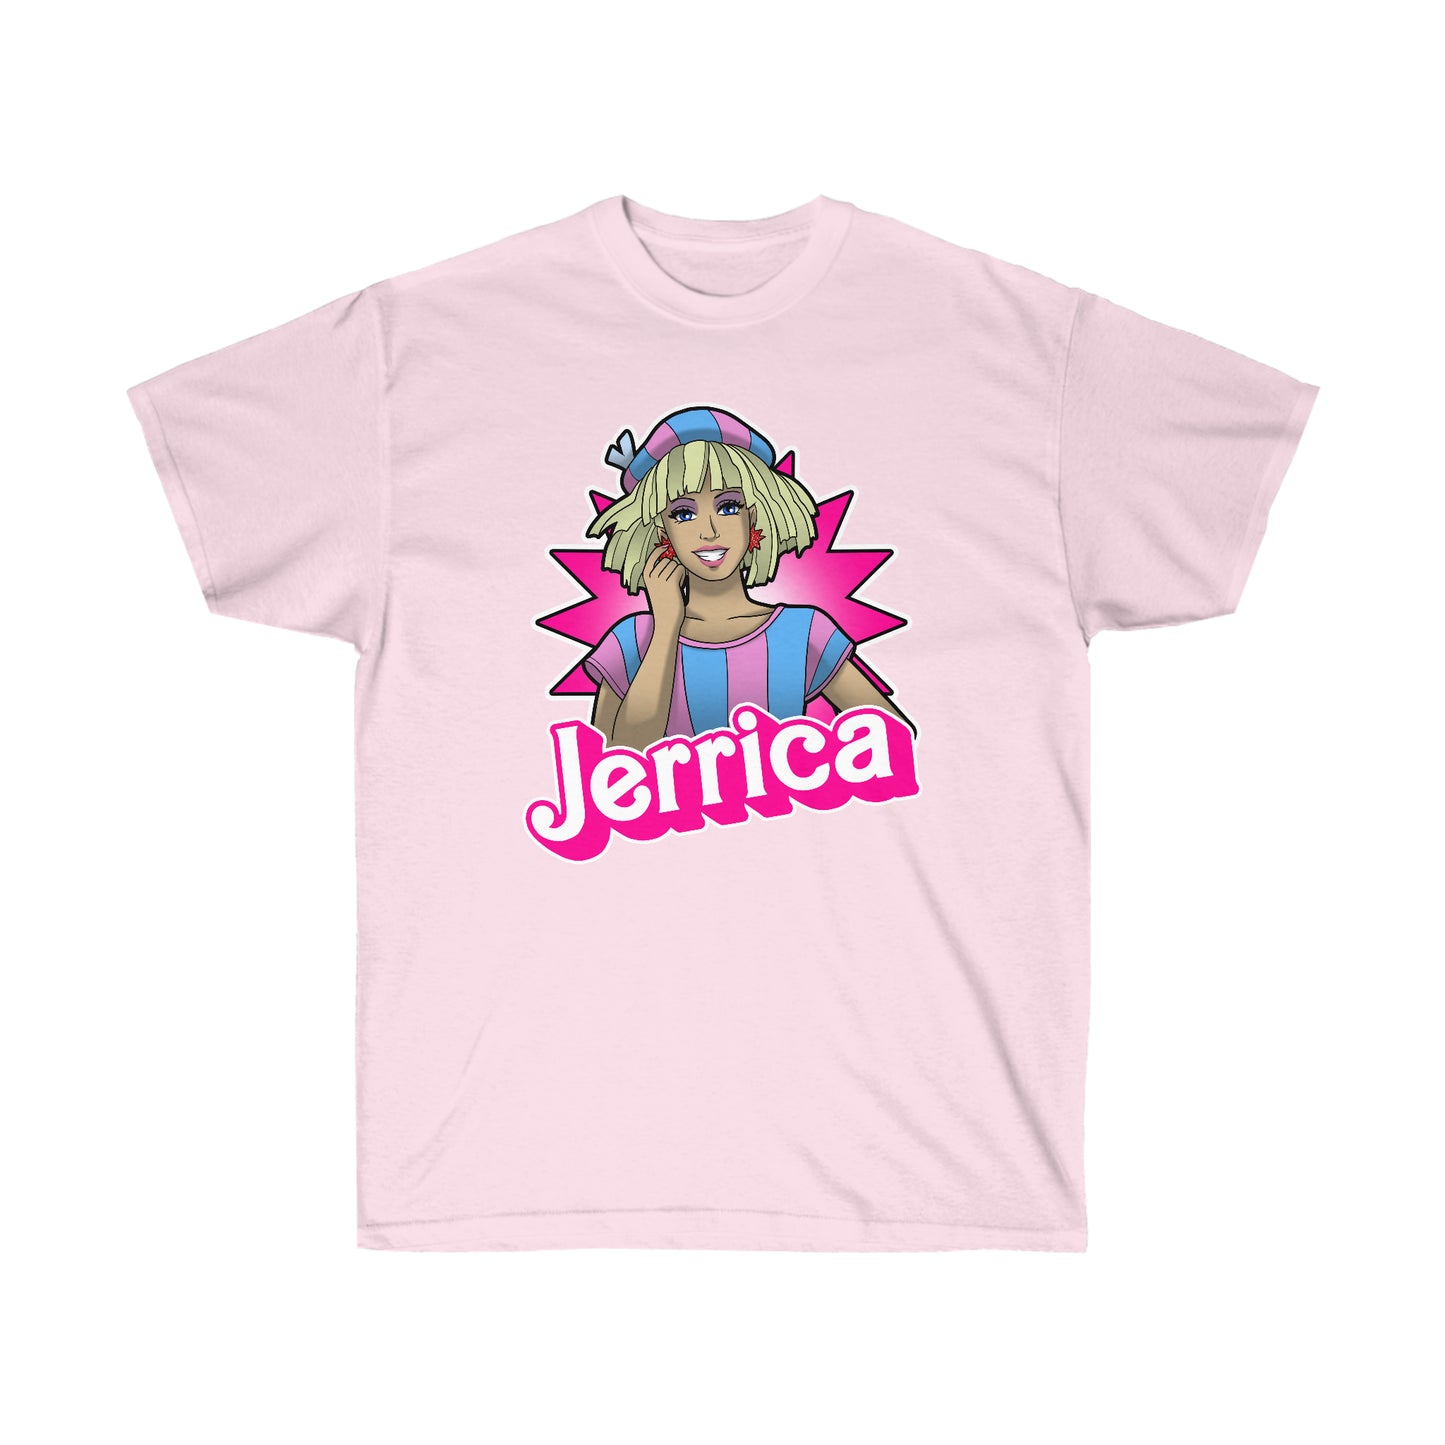 Jerrica Doll t-shirt